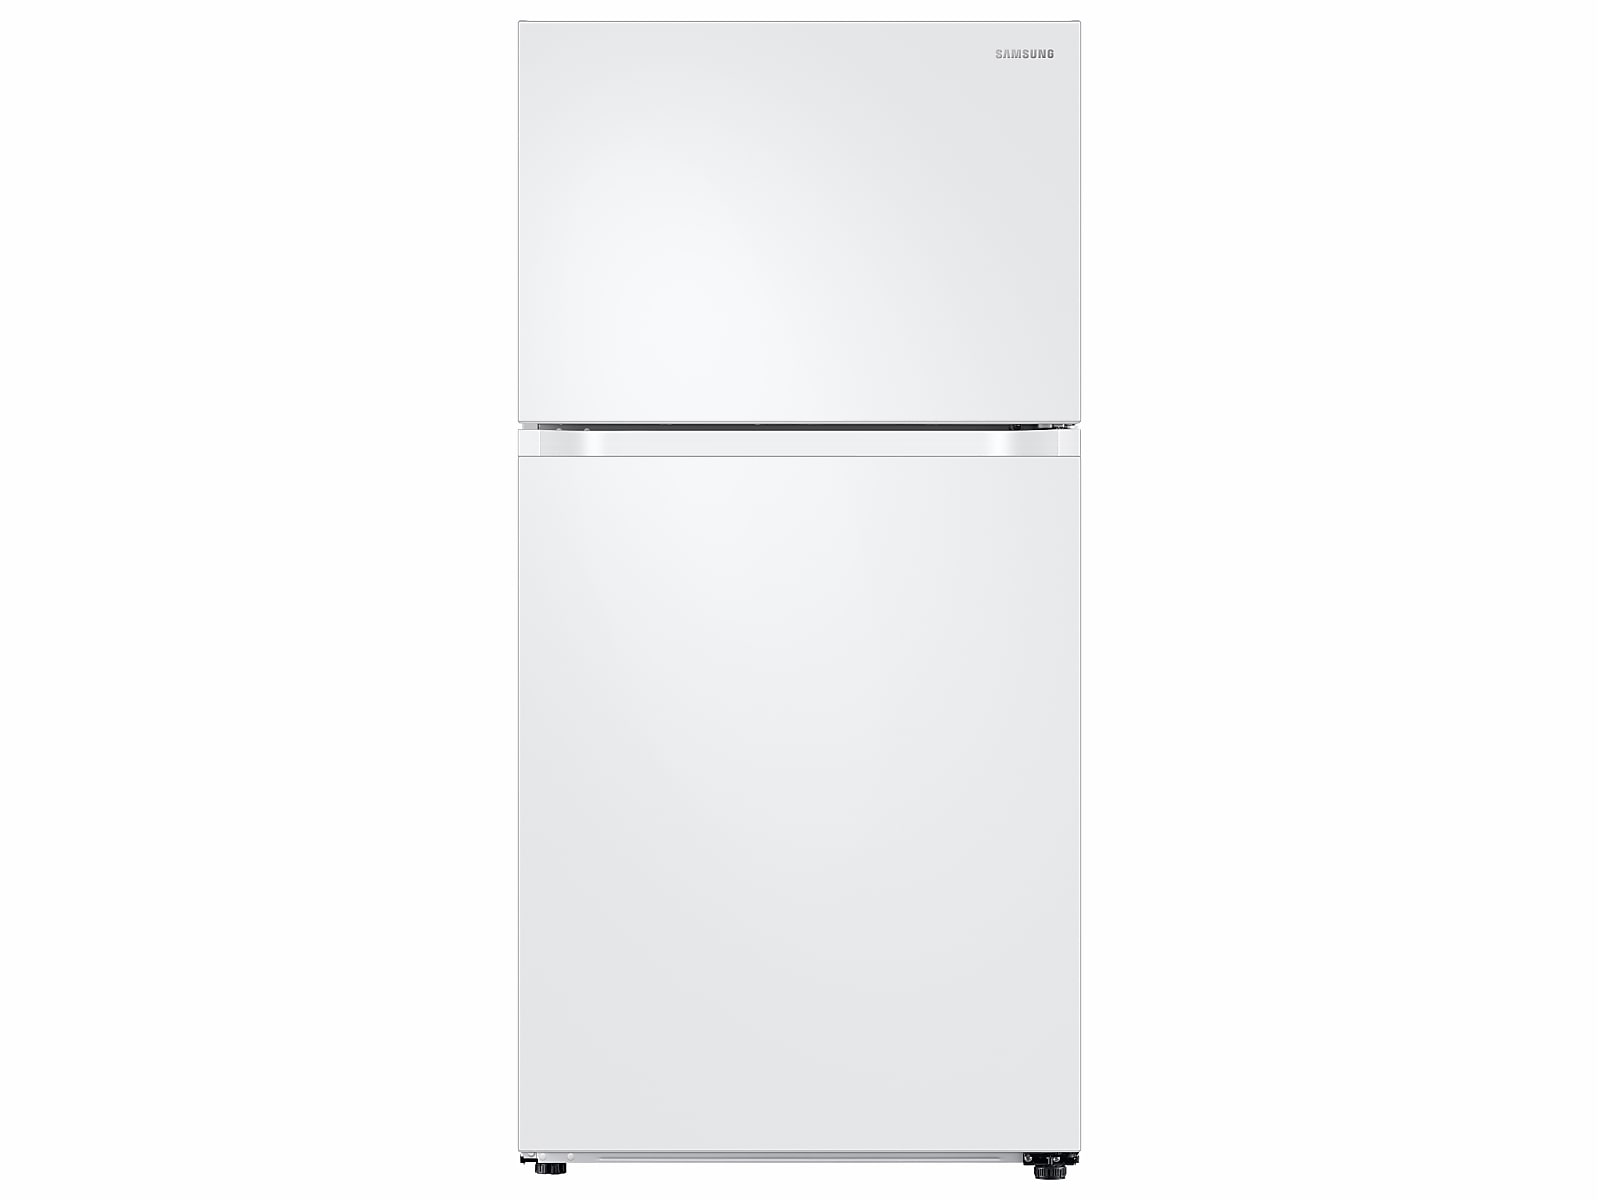 Samsung 21 cu. ft. Top Freezer Refrigerator with FlexZone™ in White(RT21M6213WW/AA)